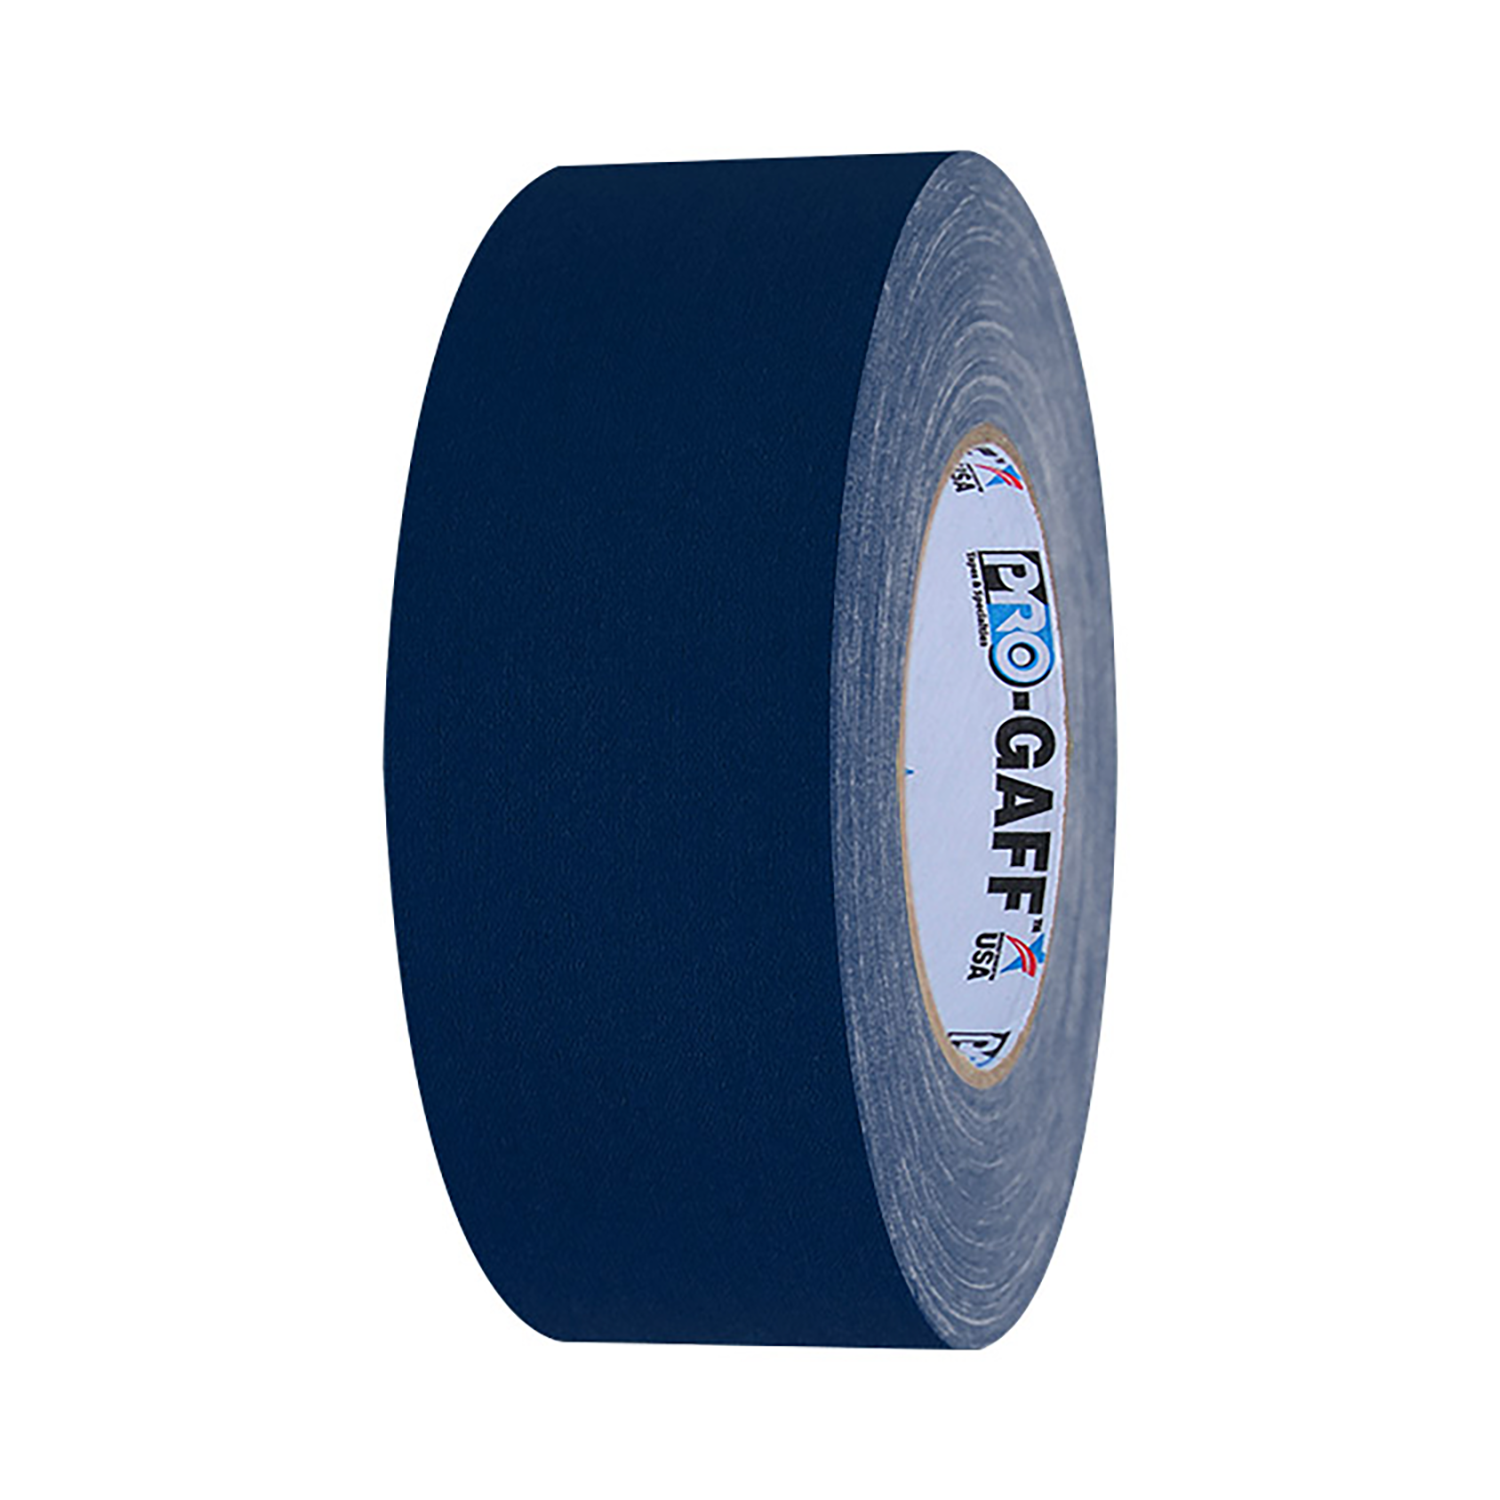 Pro Gaff Tape Cloth - Blue - 55 Yards - 1"